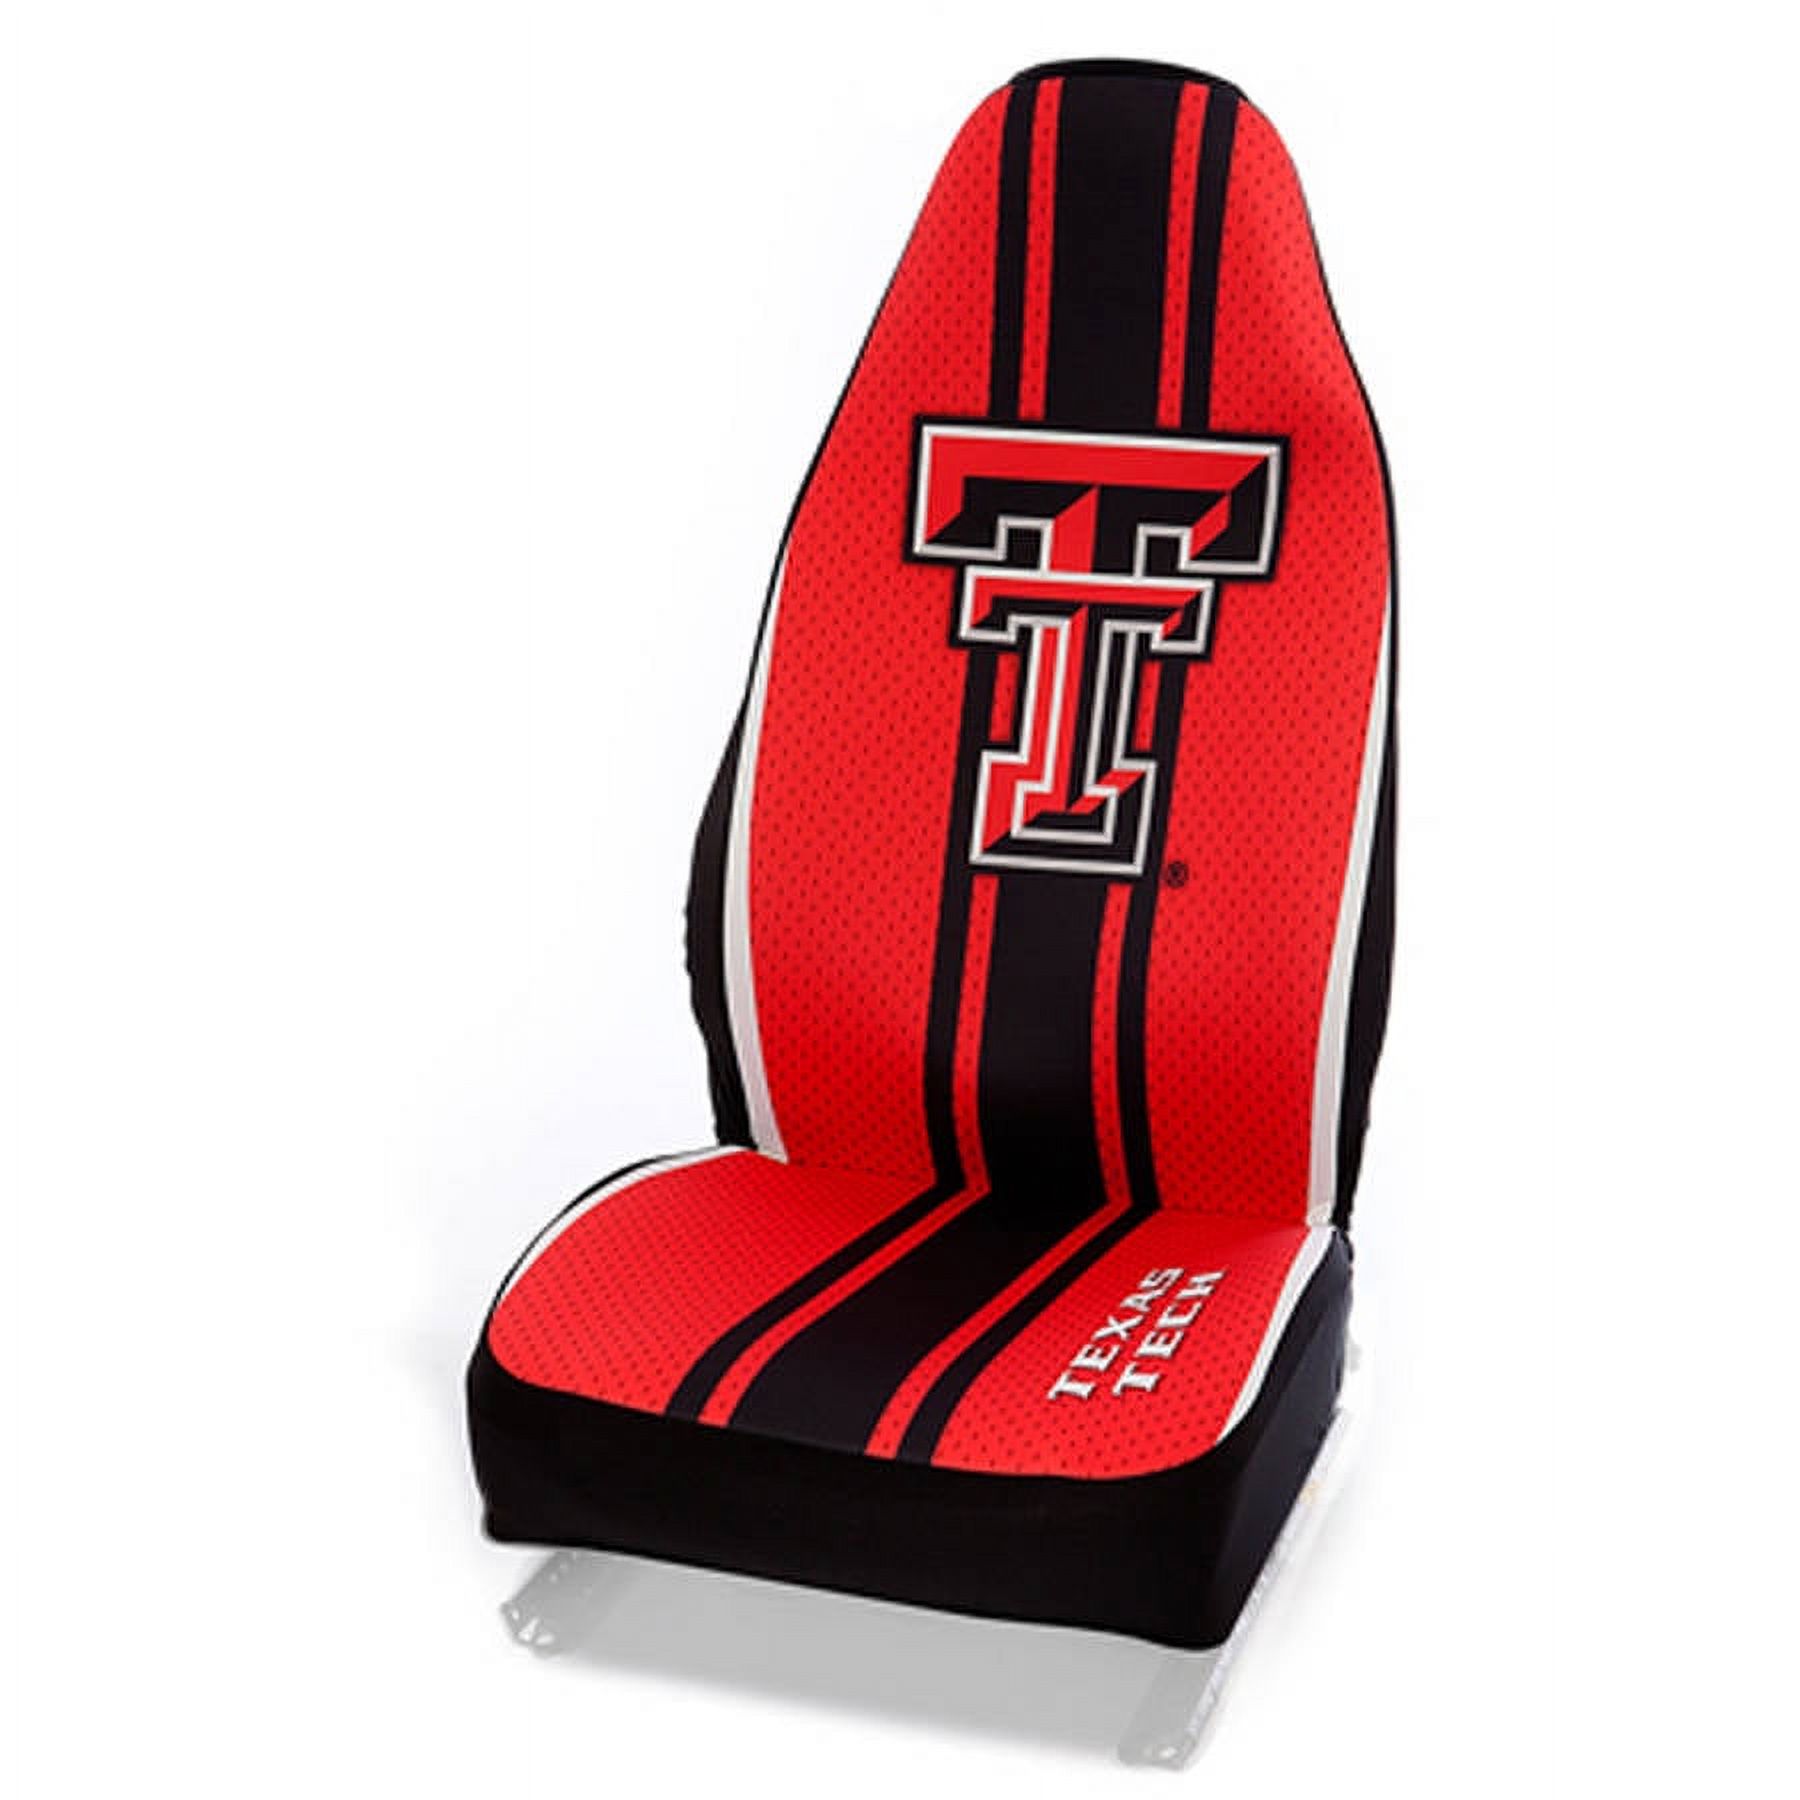 Coverking Universal Seat Cover Designer, Texas Tech University - image 1 of 4